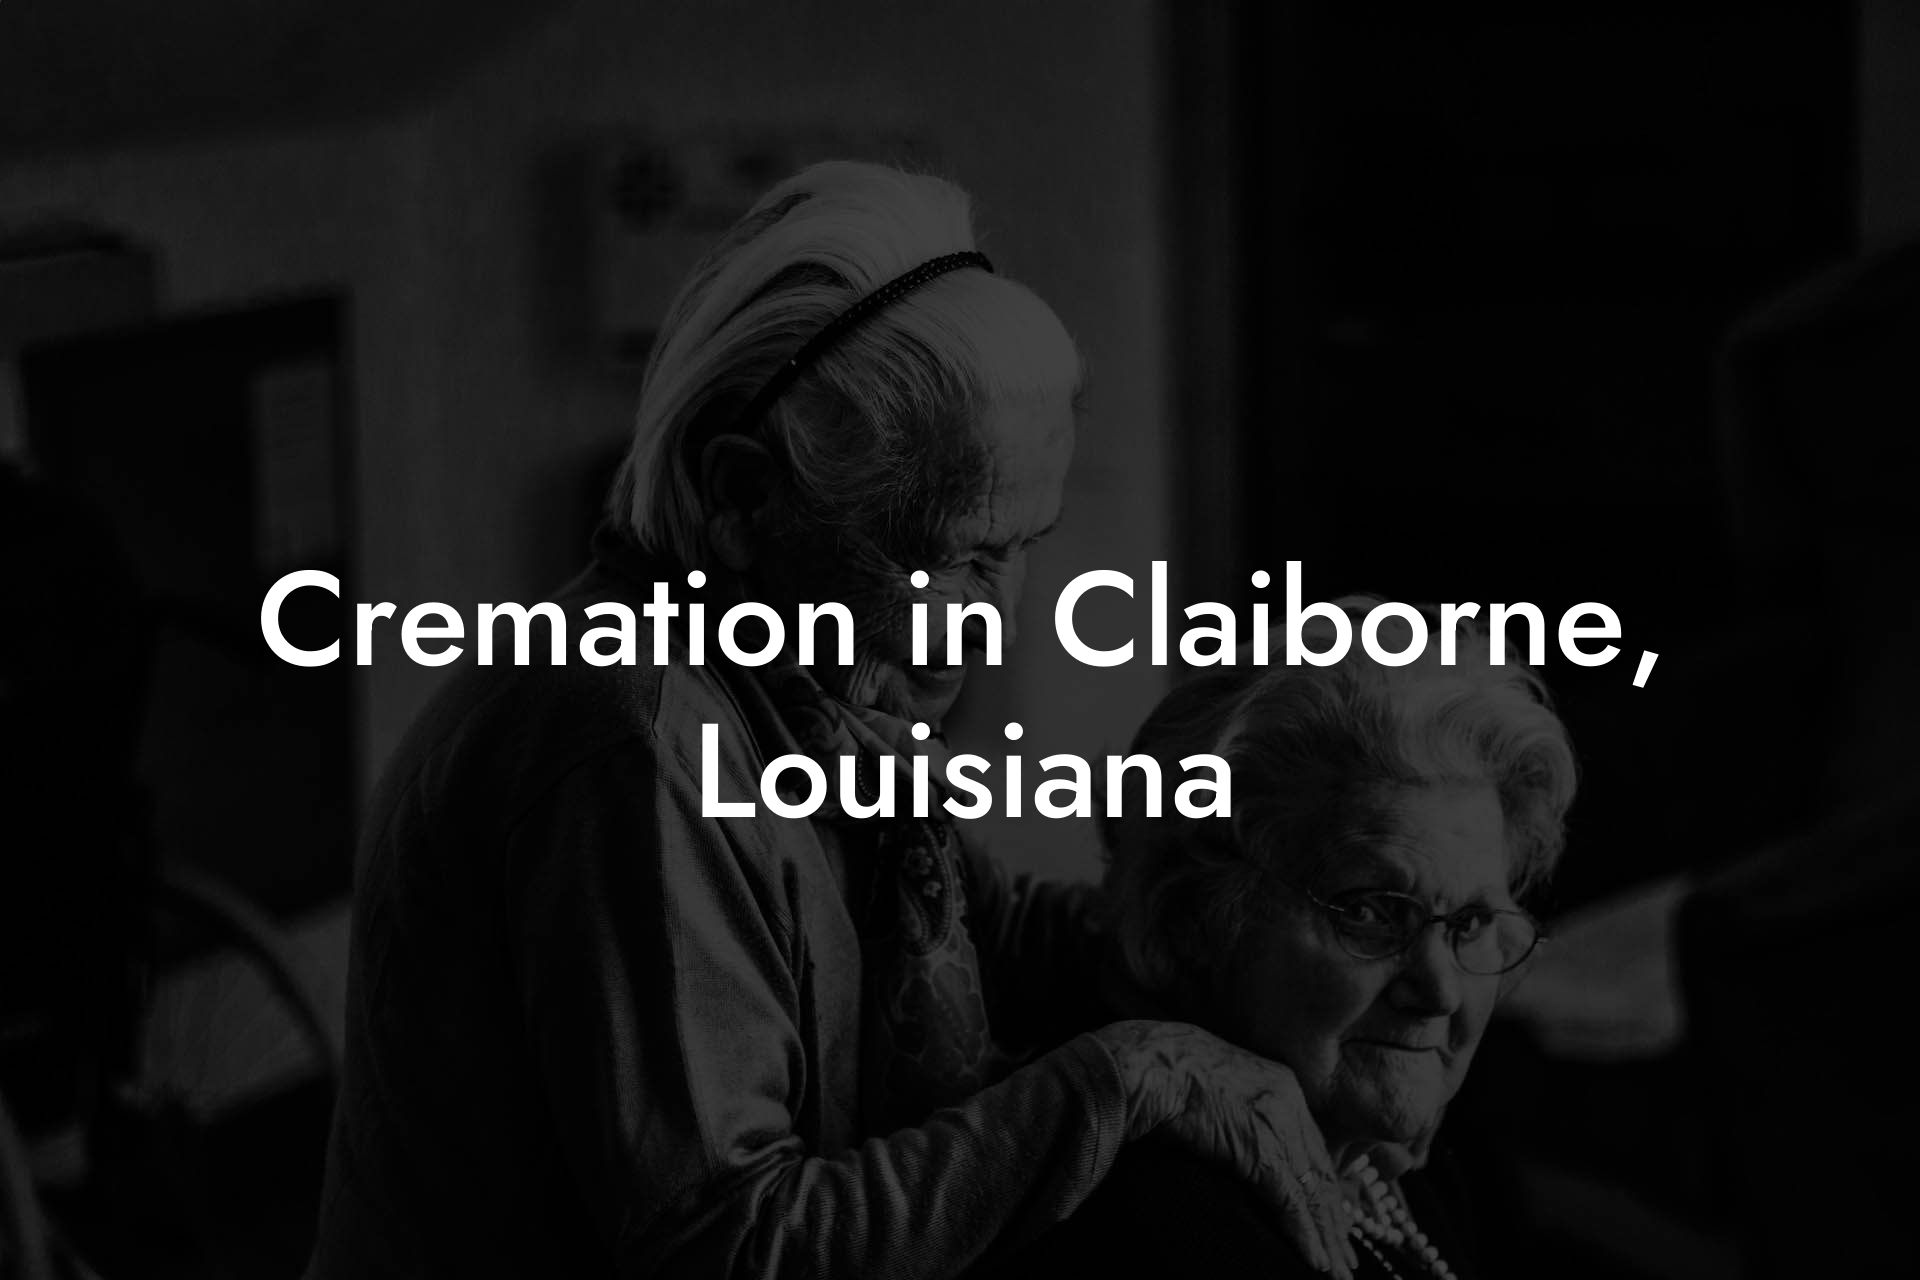 Cremation in Claiborne, Louisiana